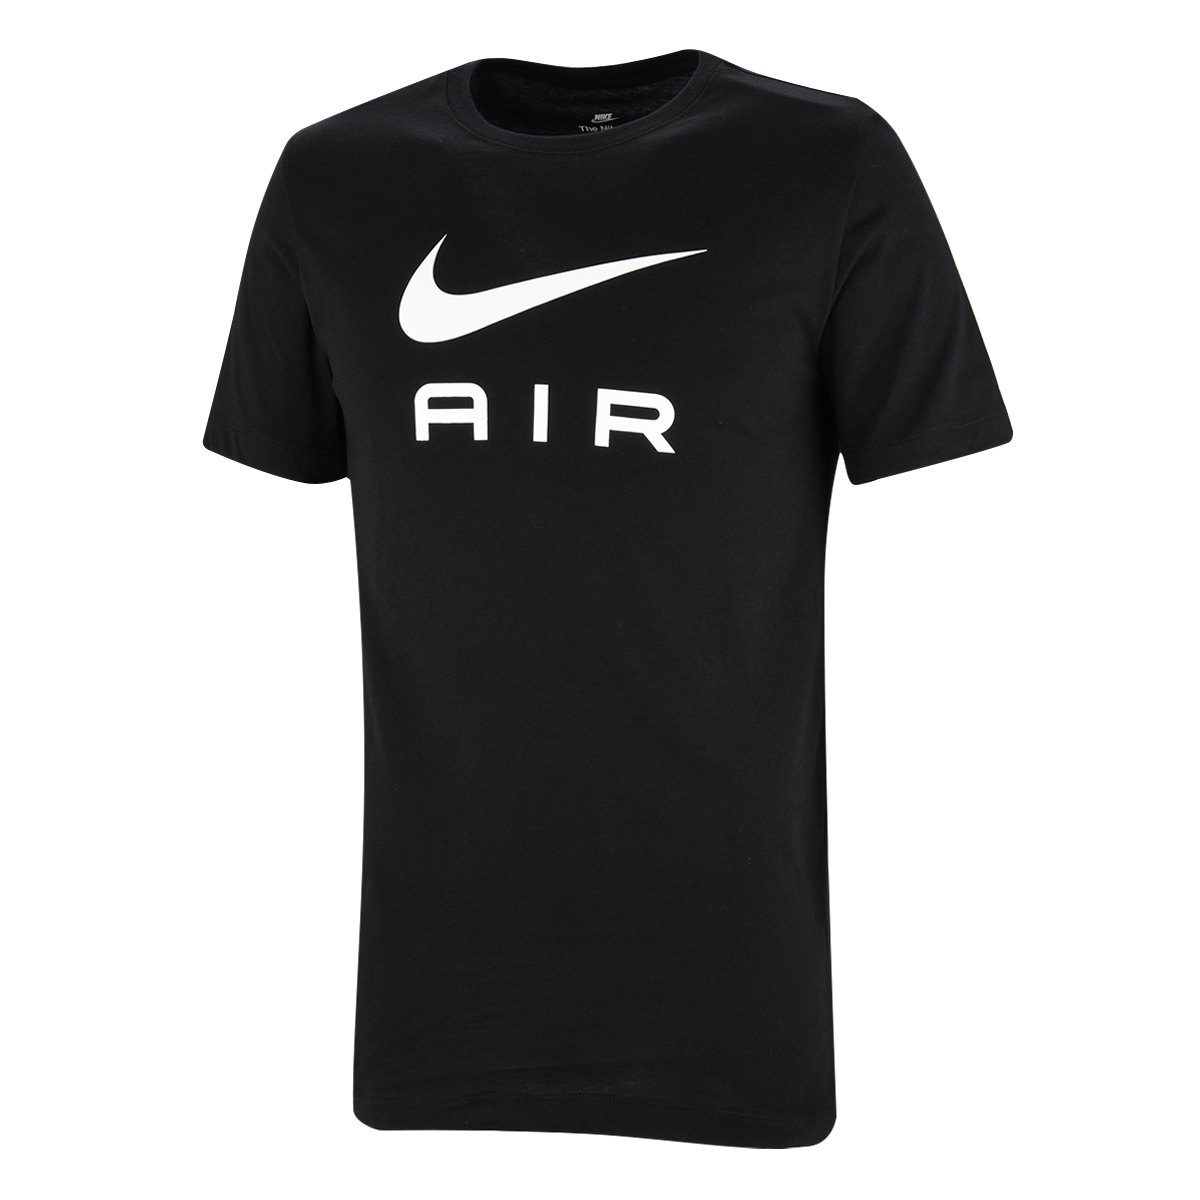 Remera Nike Sportswear Air,  image number null